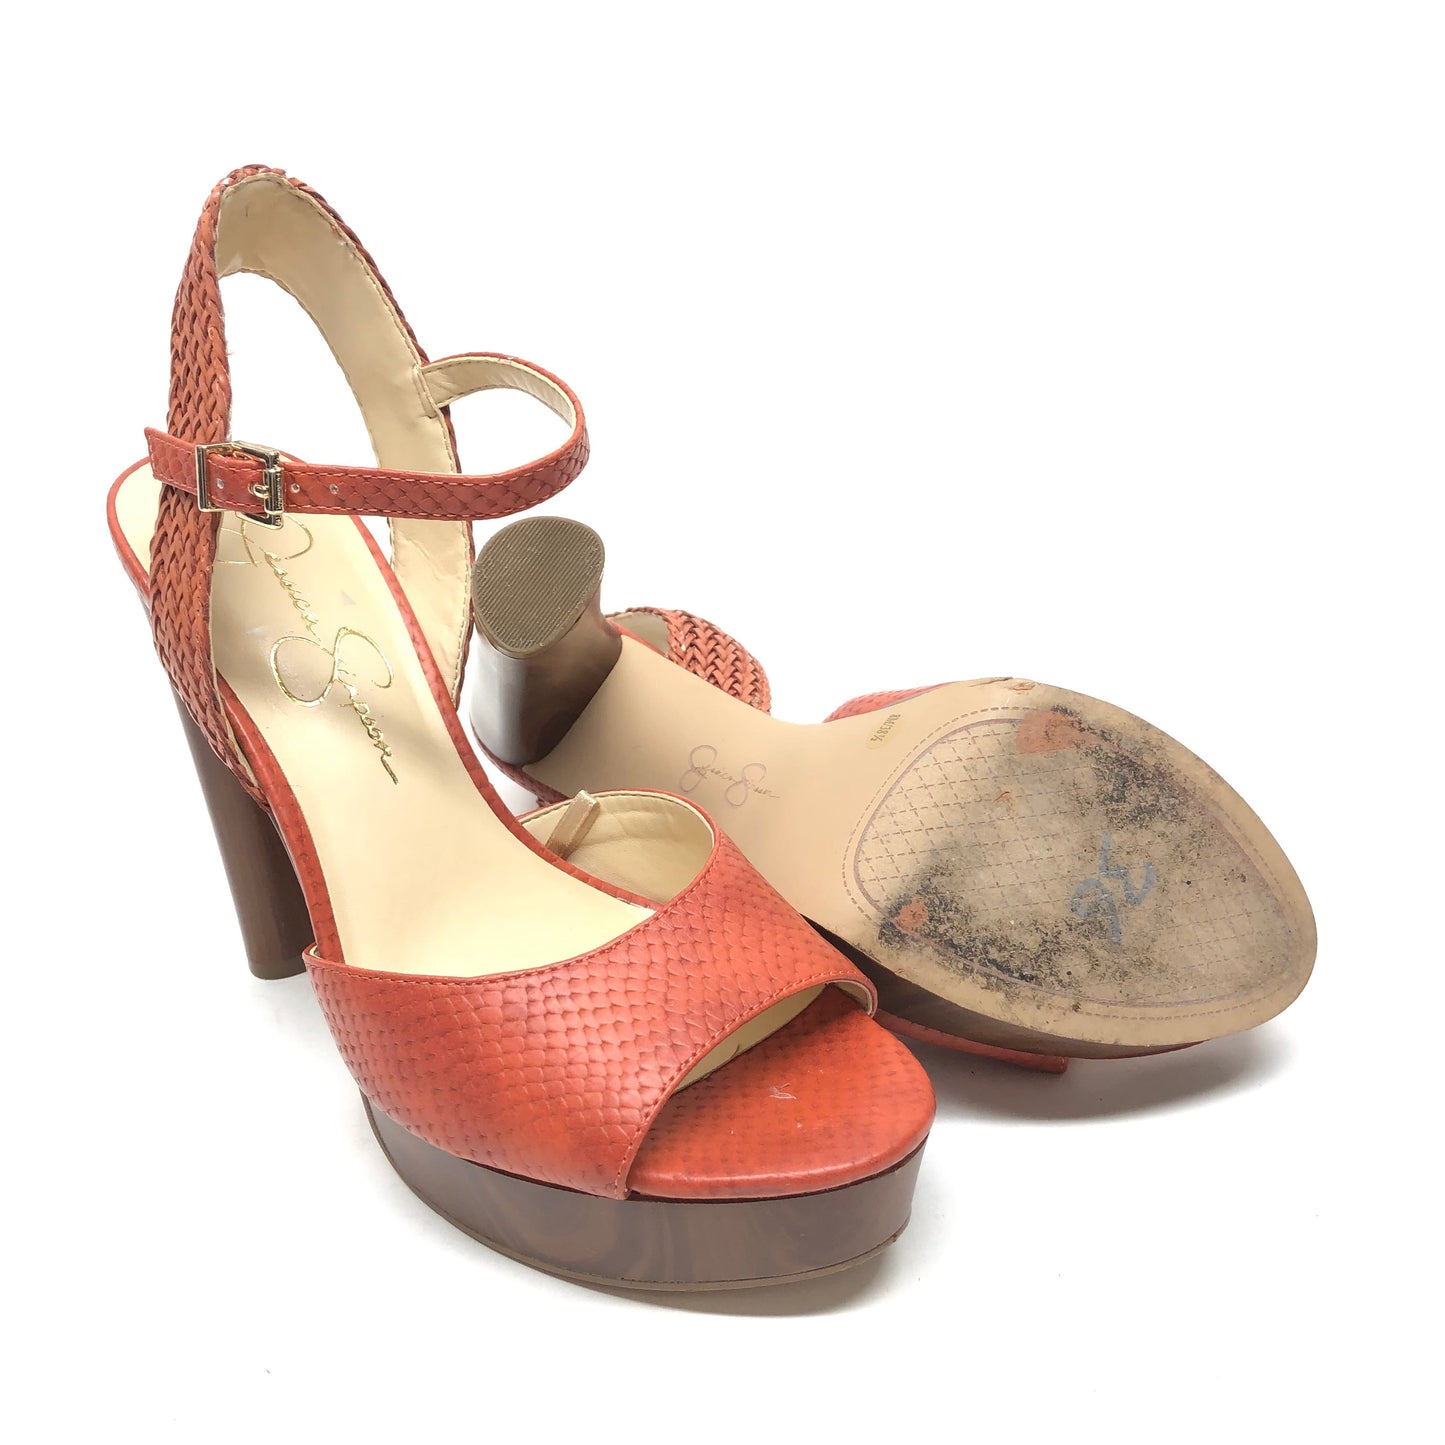 Orange Shoes Heels Block Jessica Simpson, Size 8